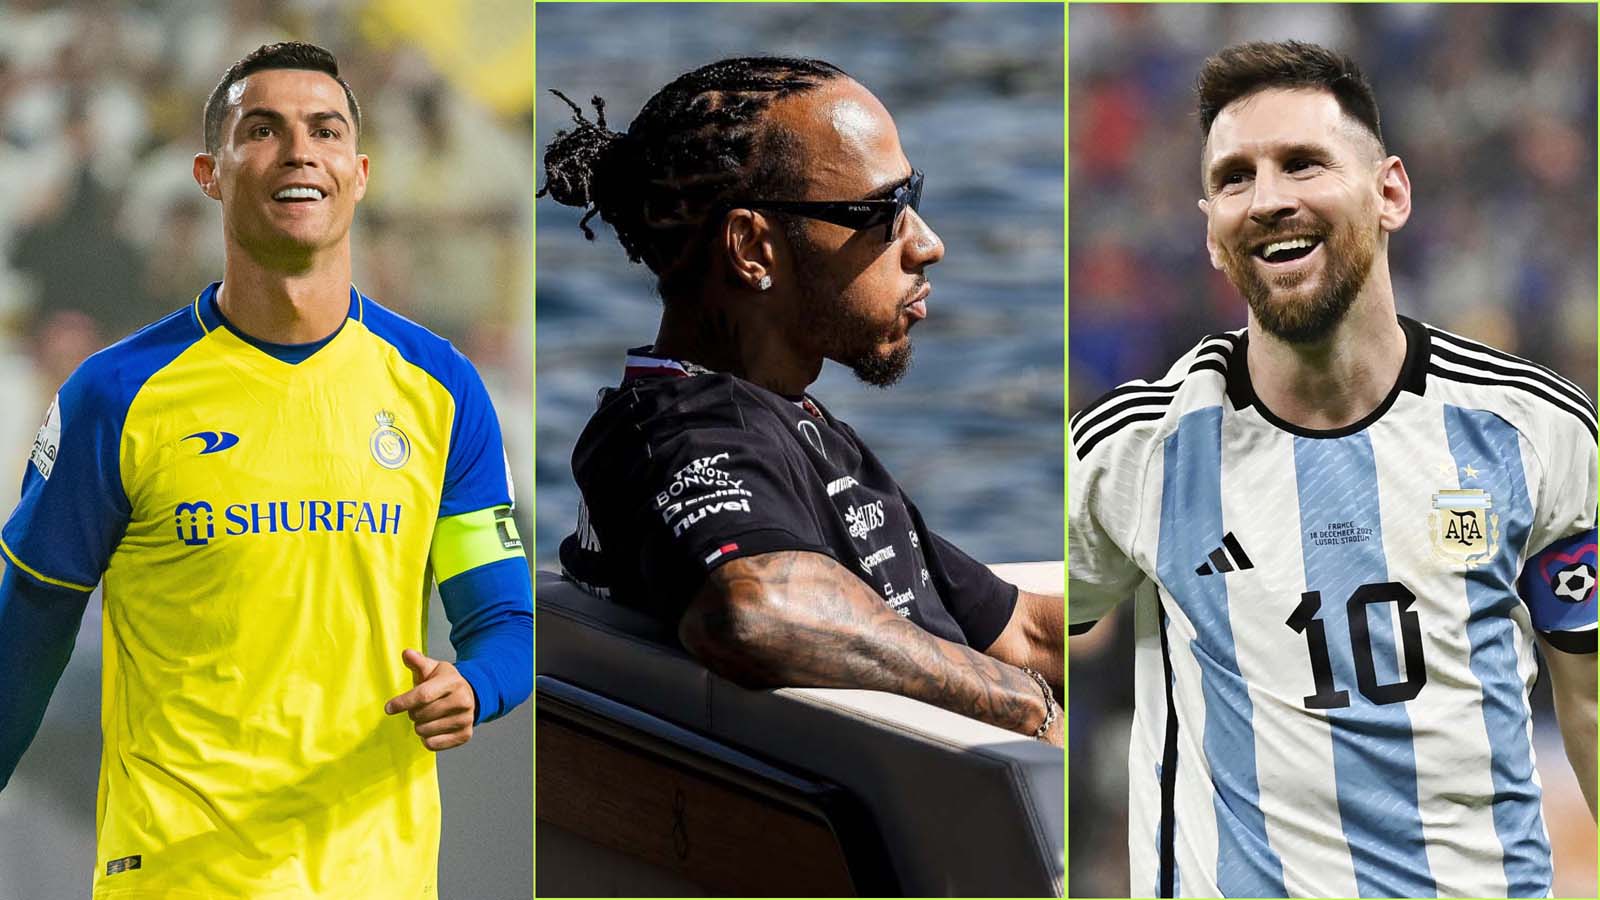 21 Best Messi and ronaldo wallpaper ideas